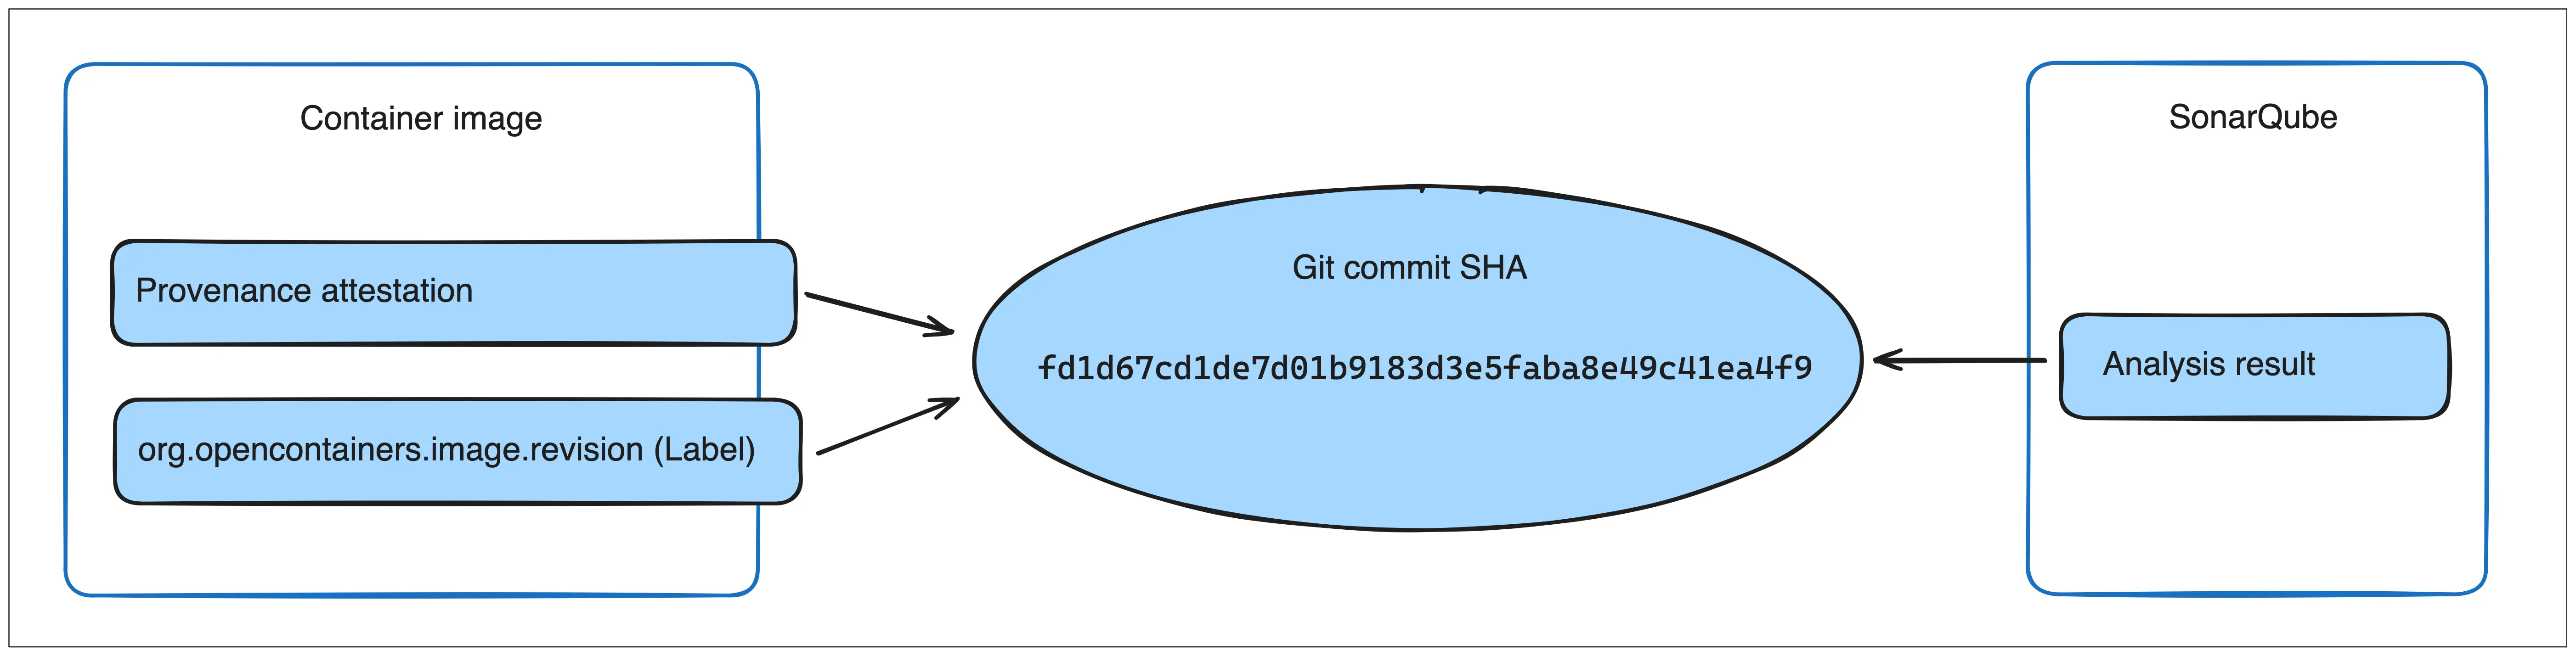 Git commit SHA links image with SonarQube analysis